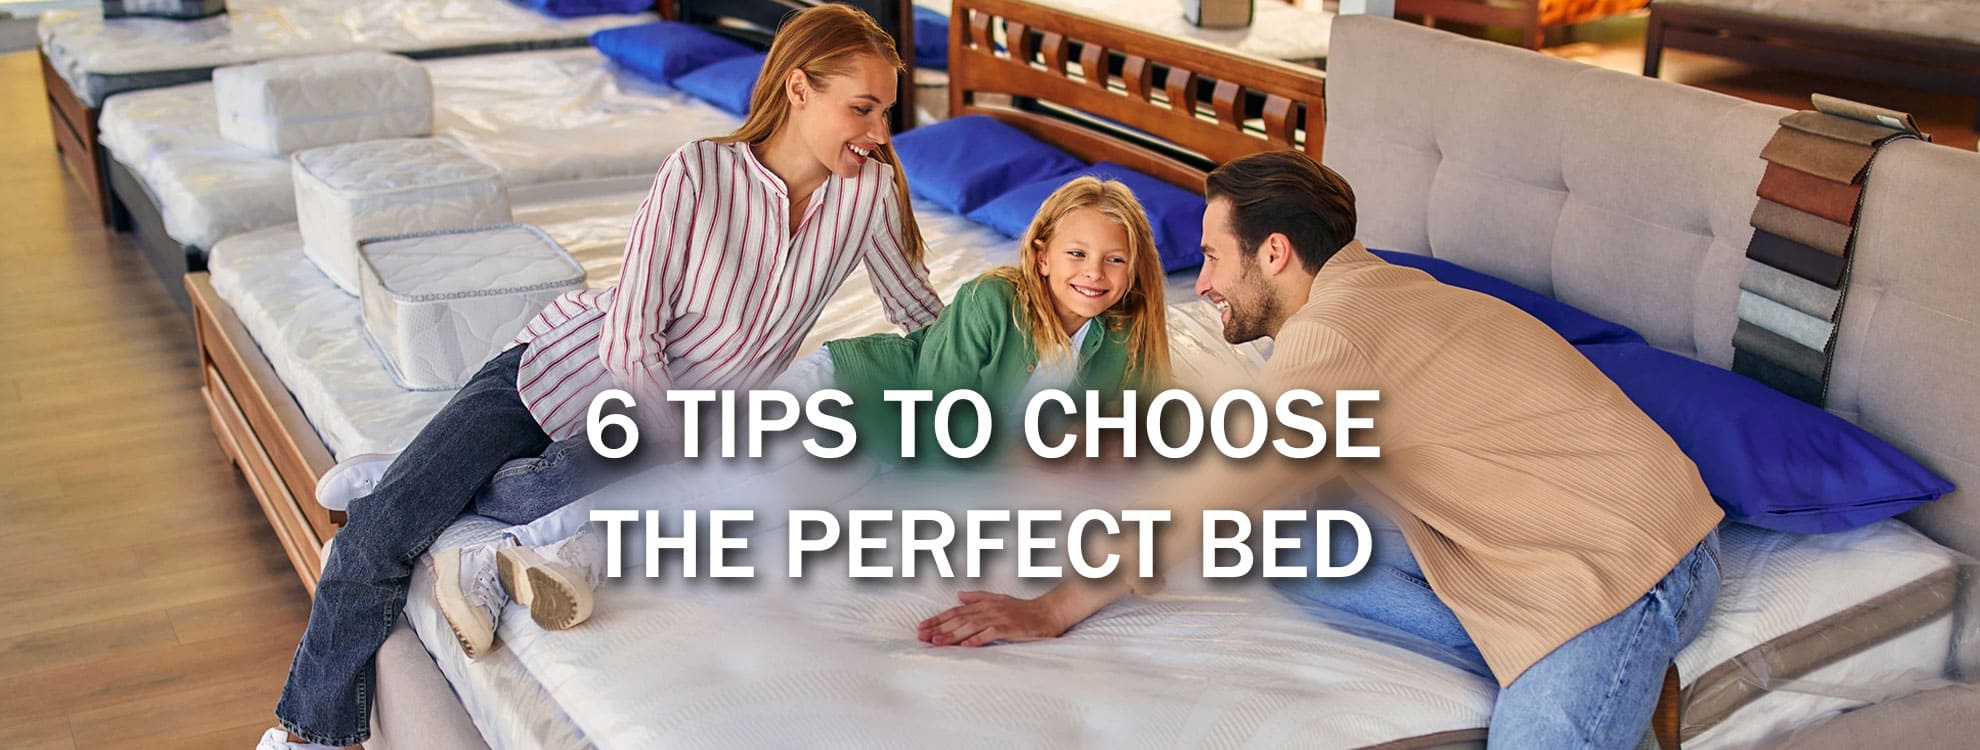 Choose Perfact Bed